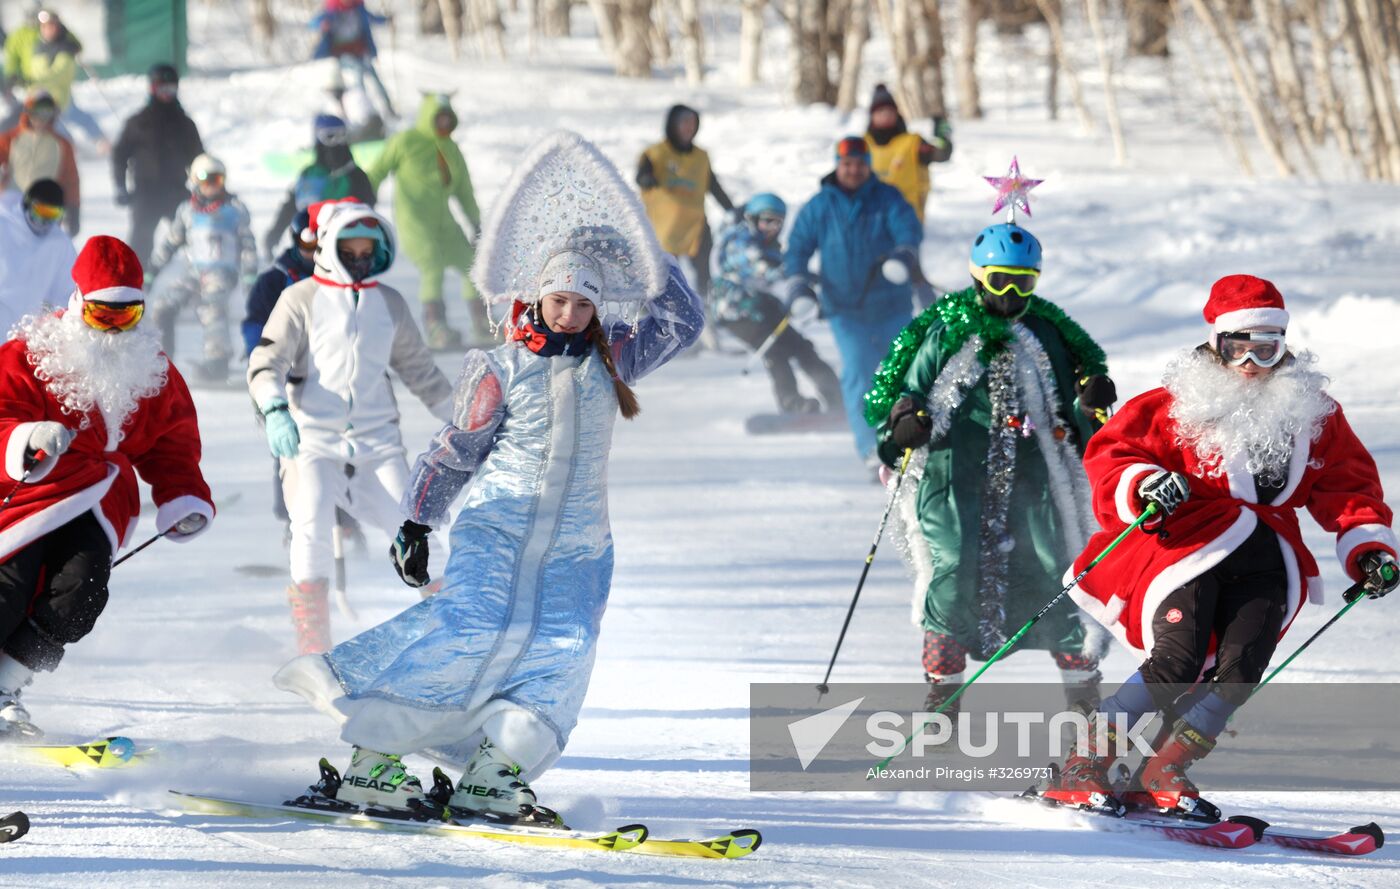 Public costumed downhill run on Mount Moroznaya in Kamchatka